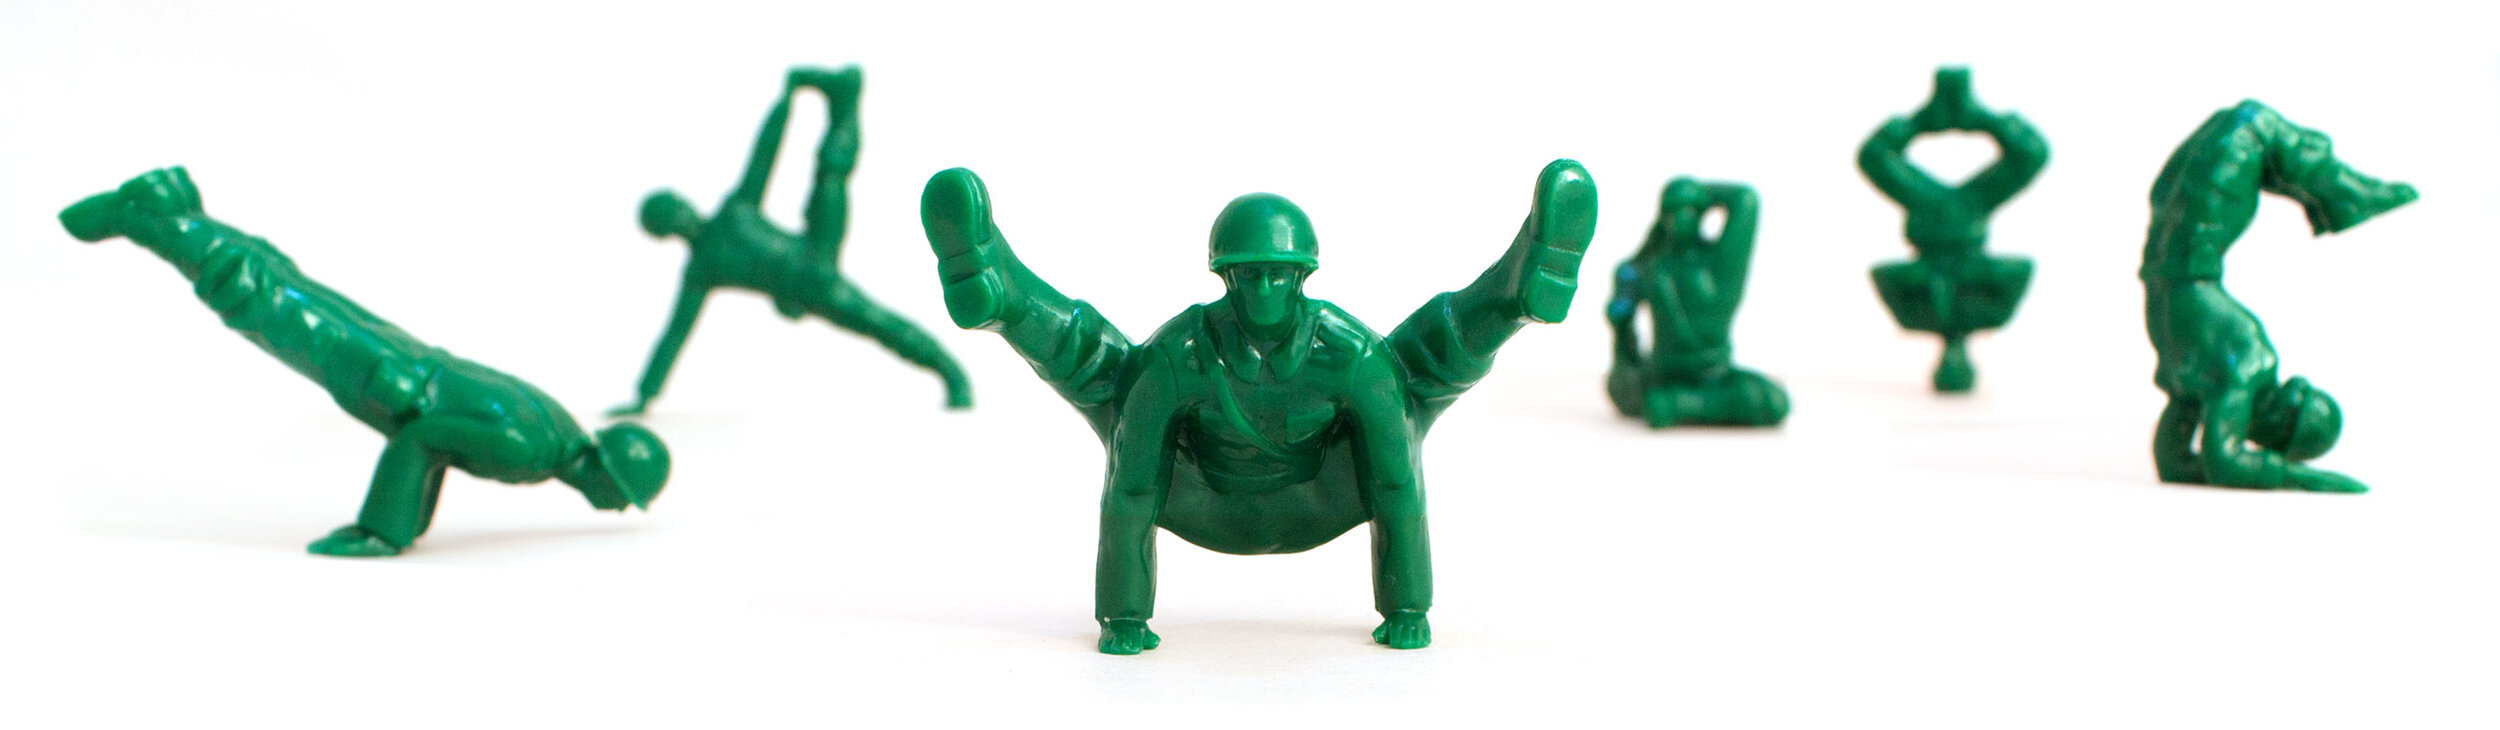 Green Army Men in Yoga positions Yoga Joe's Series 1 **NEW IN BOX* C43 